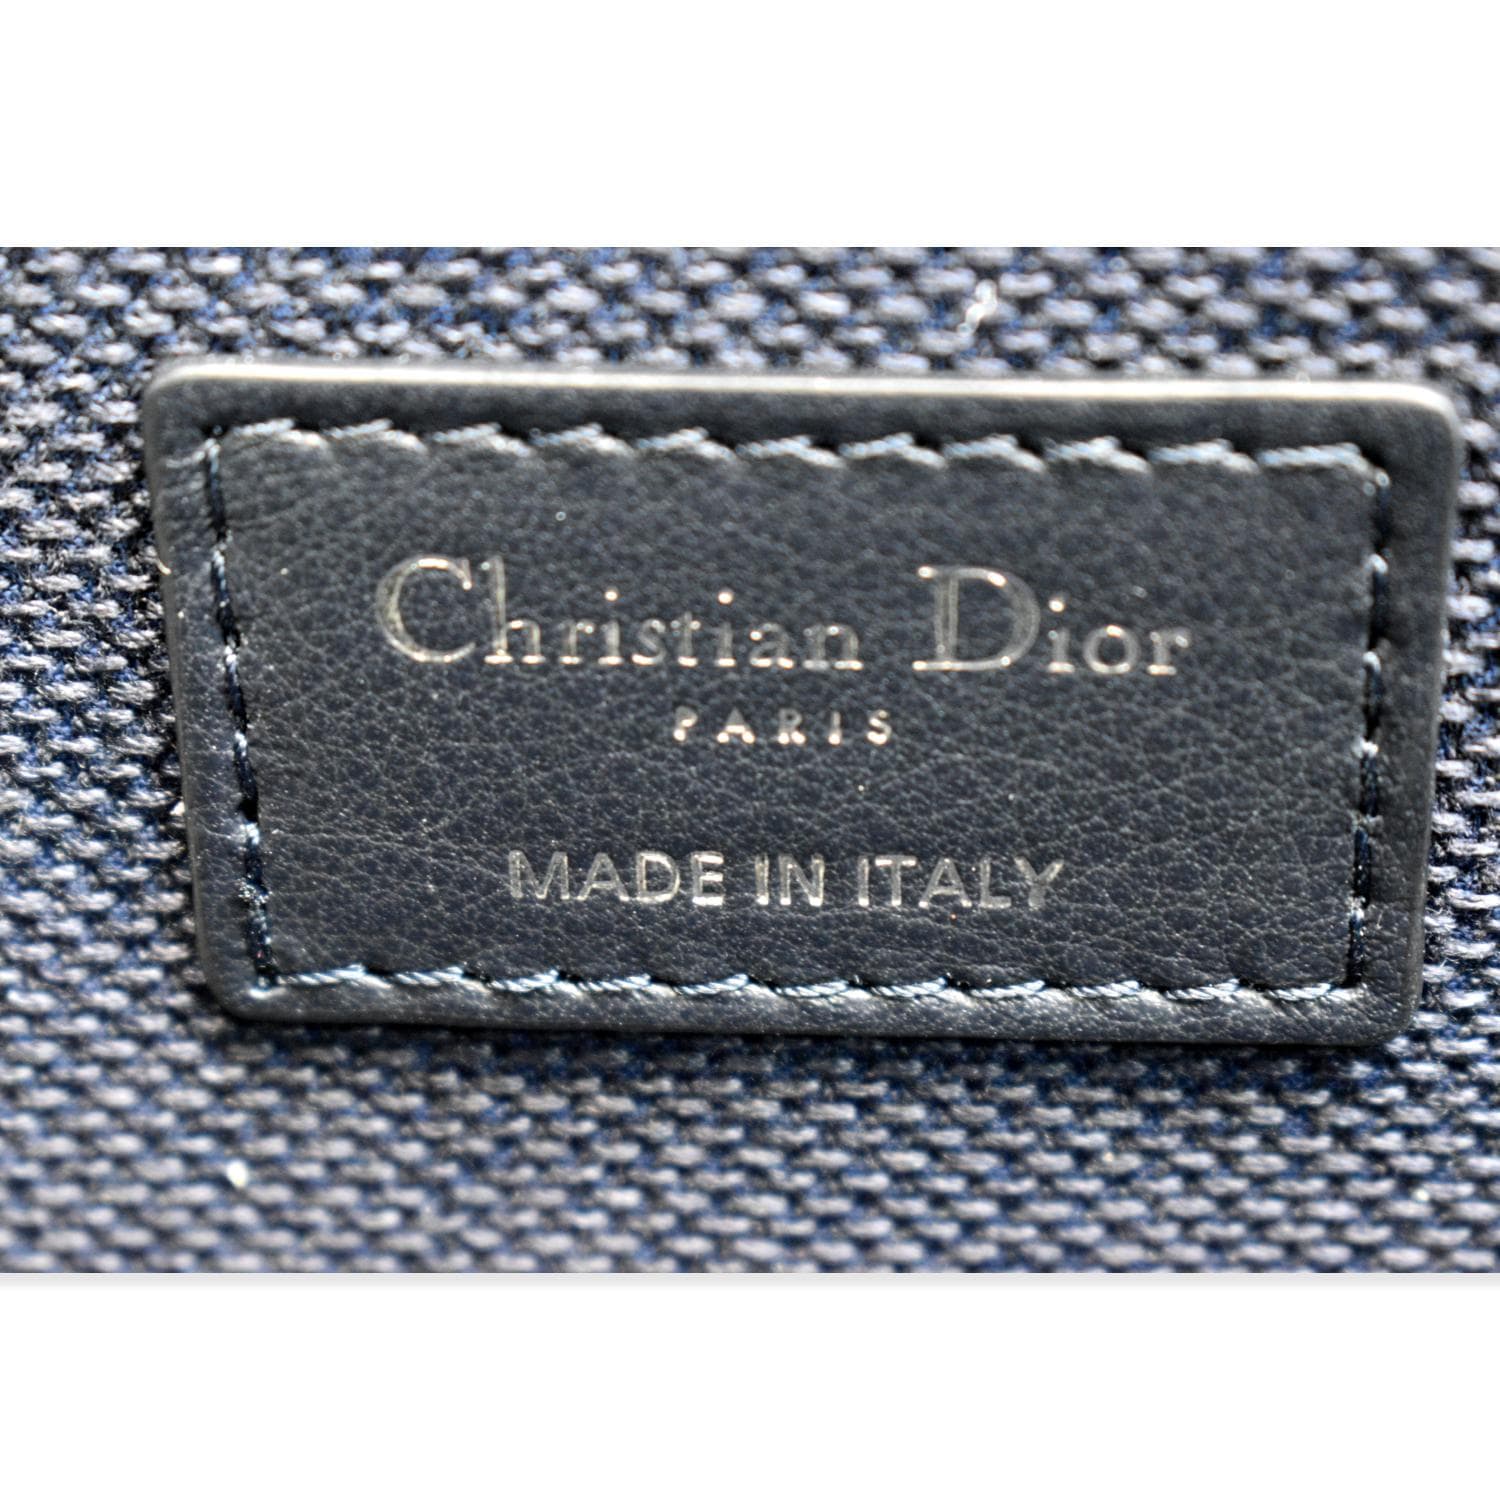 DiorTravel Vanity Case Blue Dior Oblique Embroidery